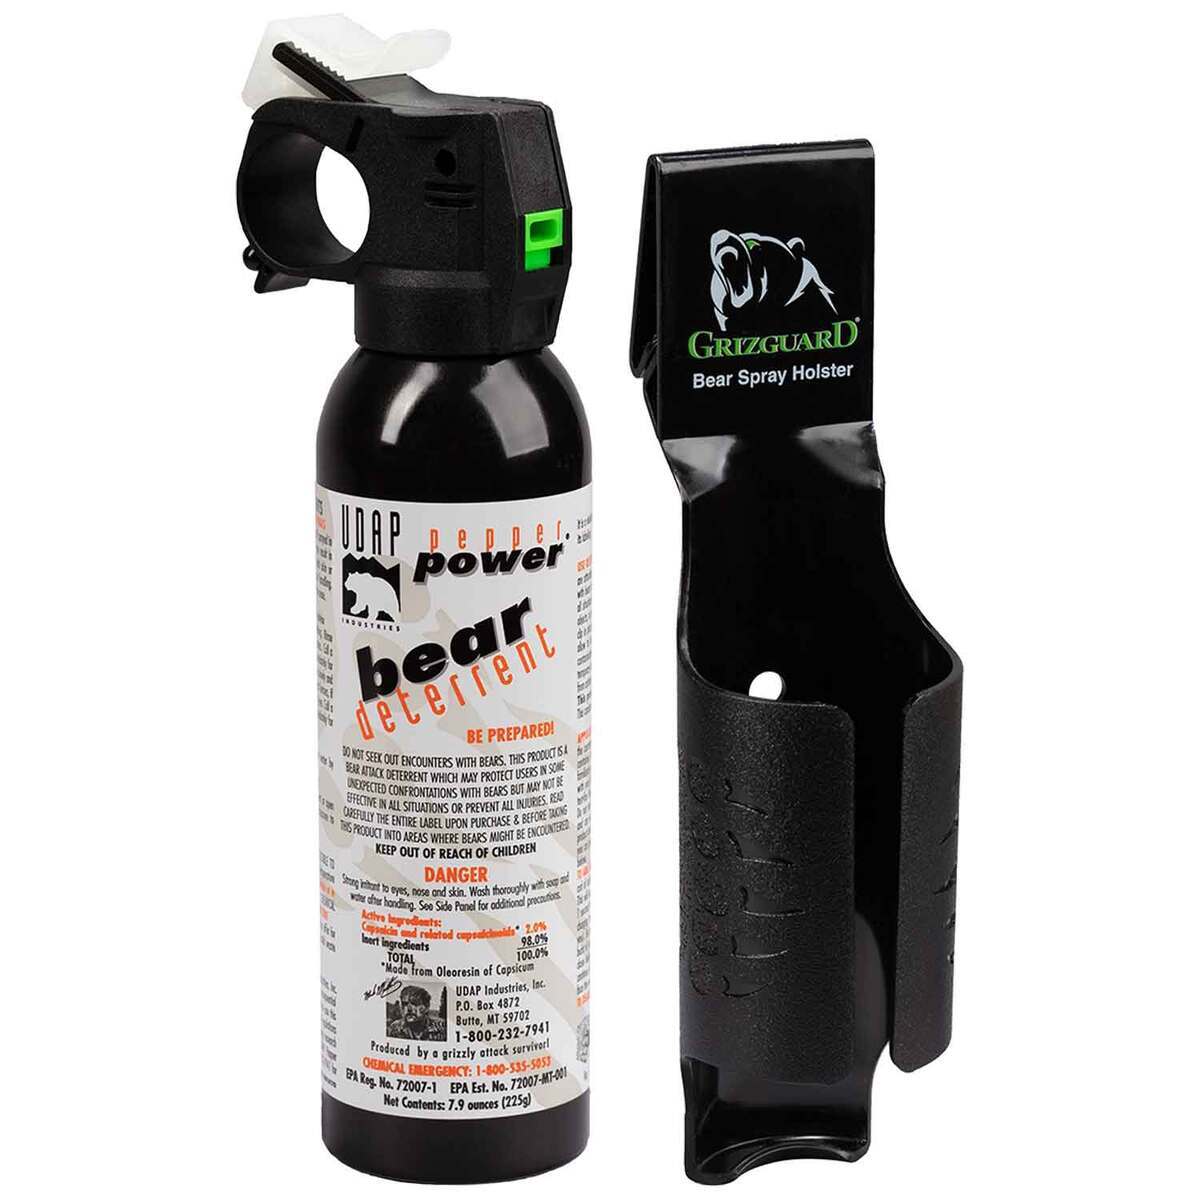 Bear Spray rental 7-8 oz - 30-32 ft / 5-8 seconds